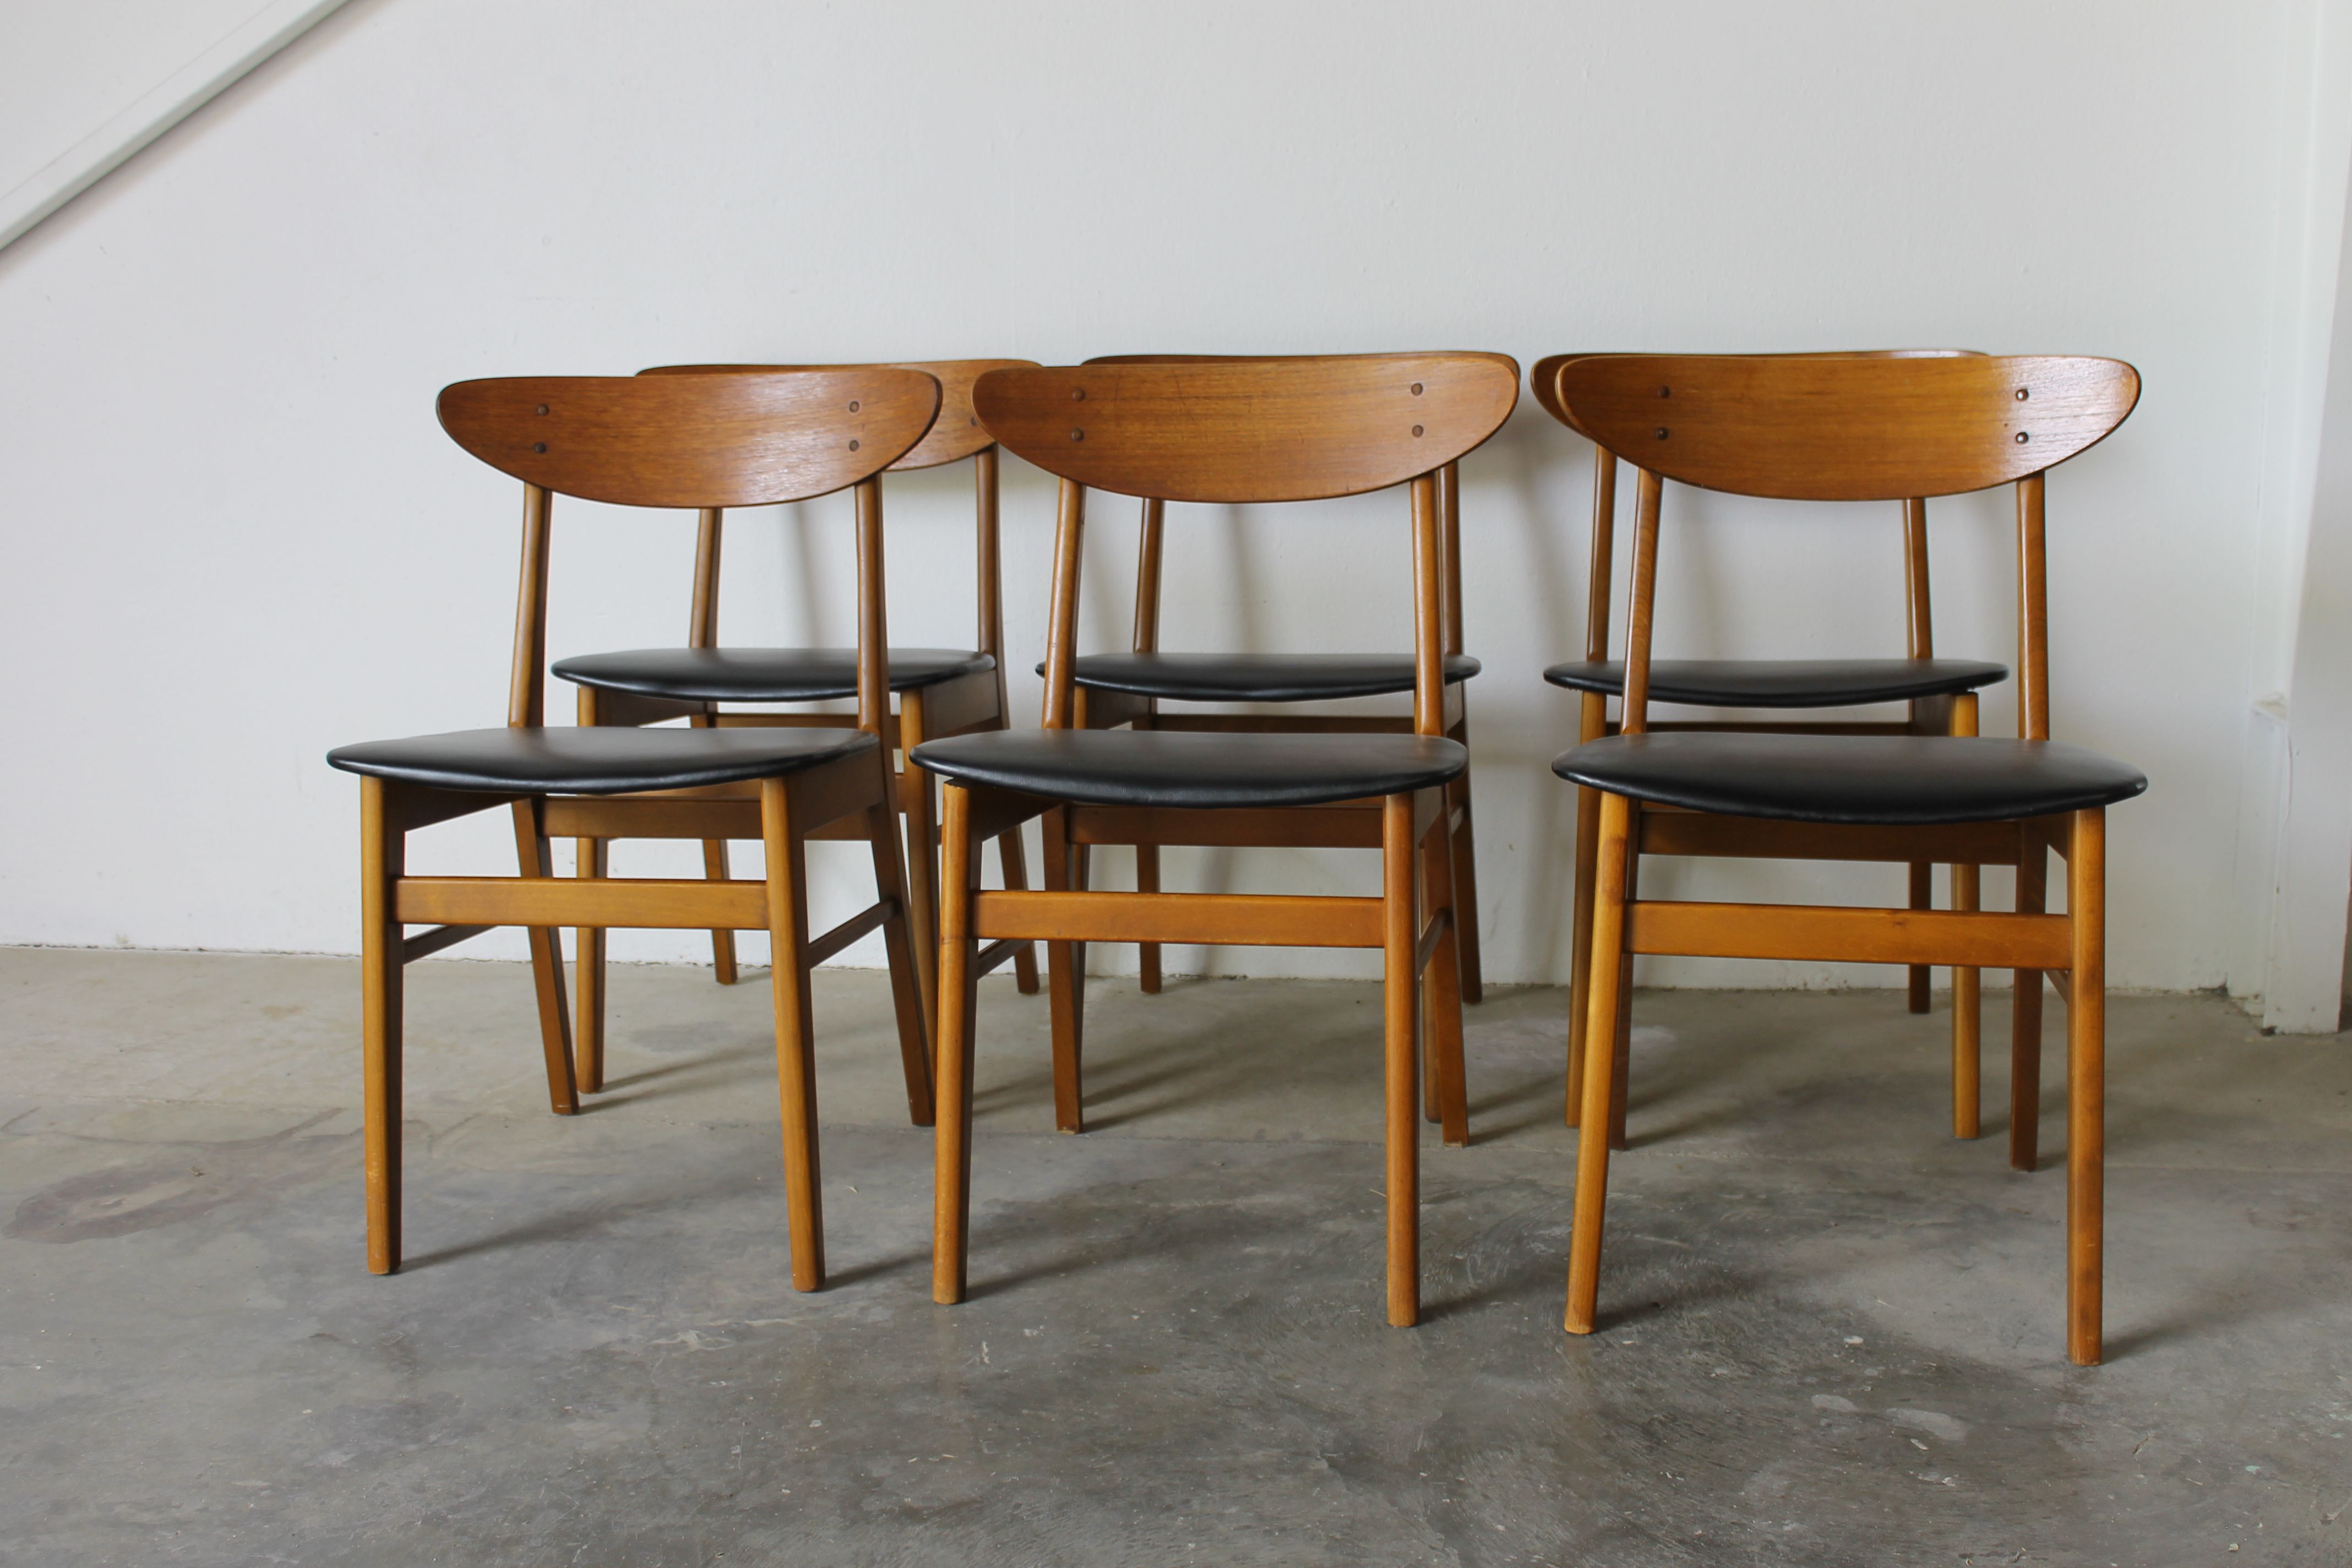 Set of 6 vintage Scandinavian dining chairs - Design Market